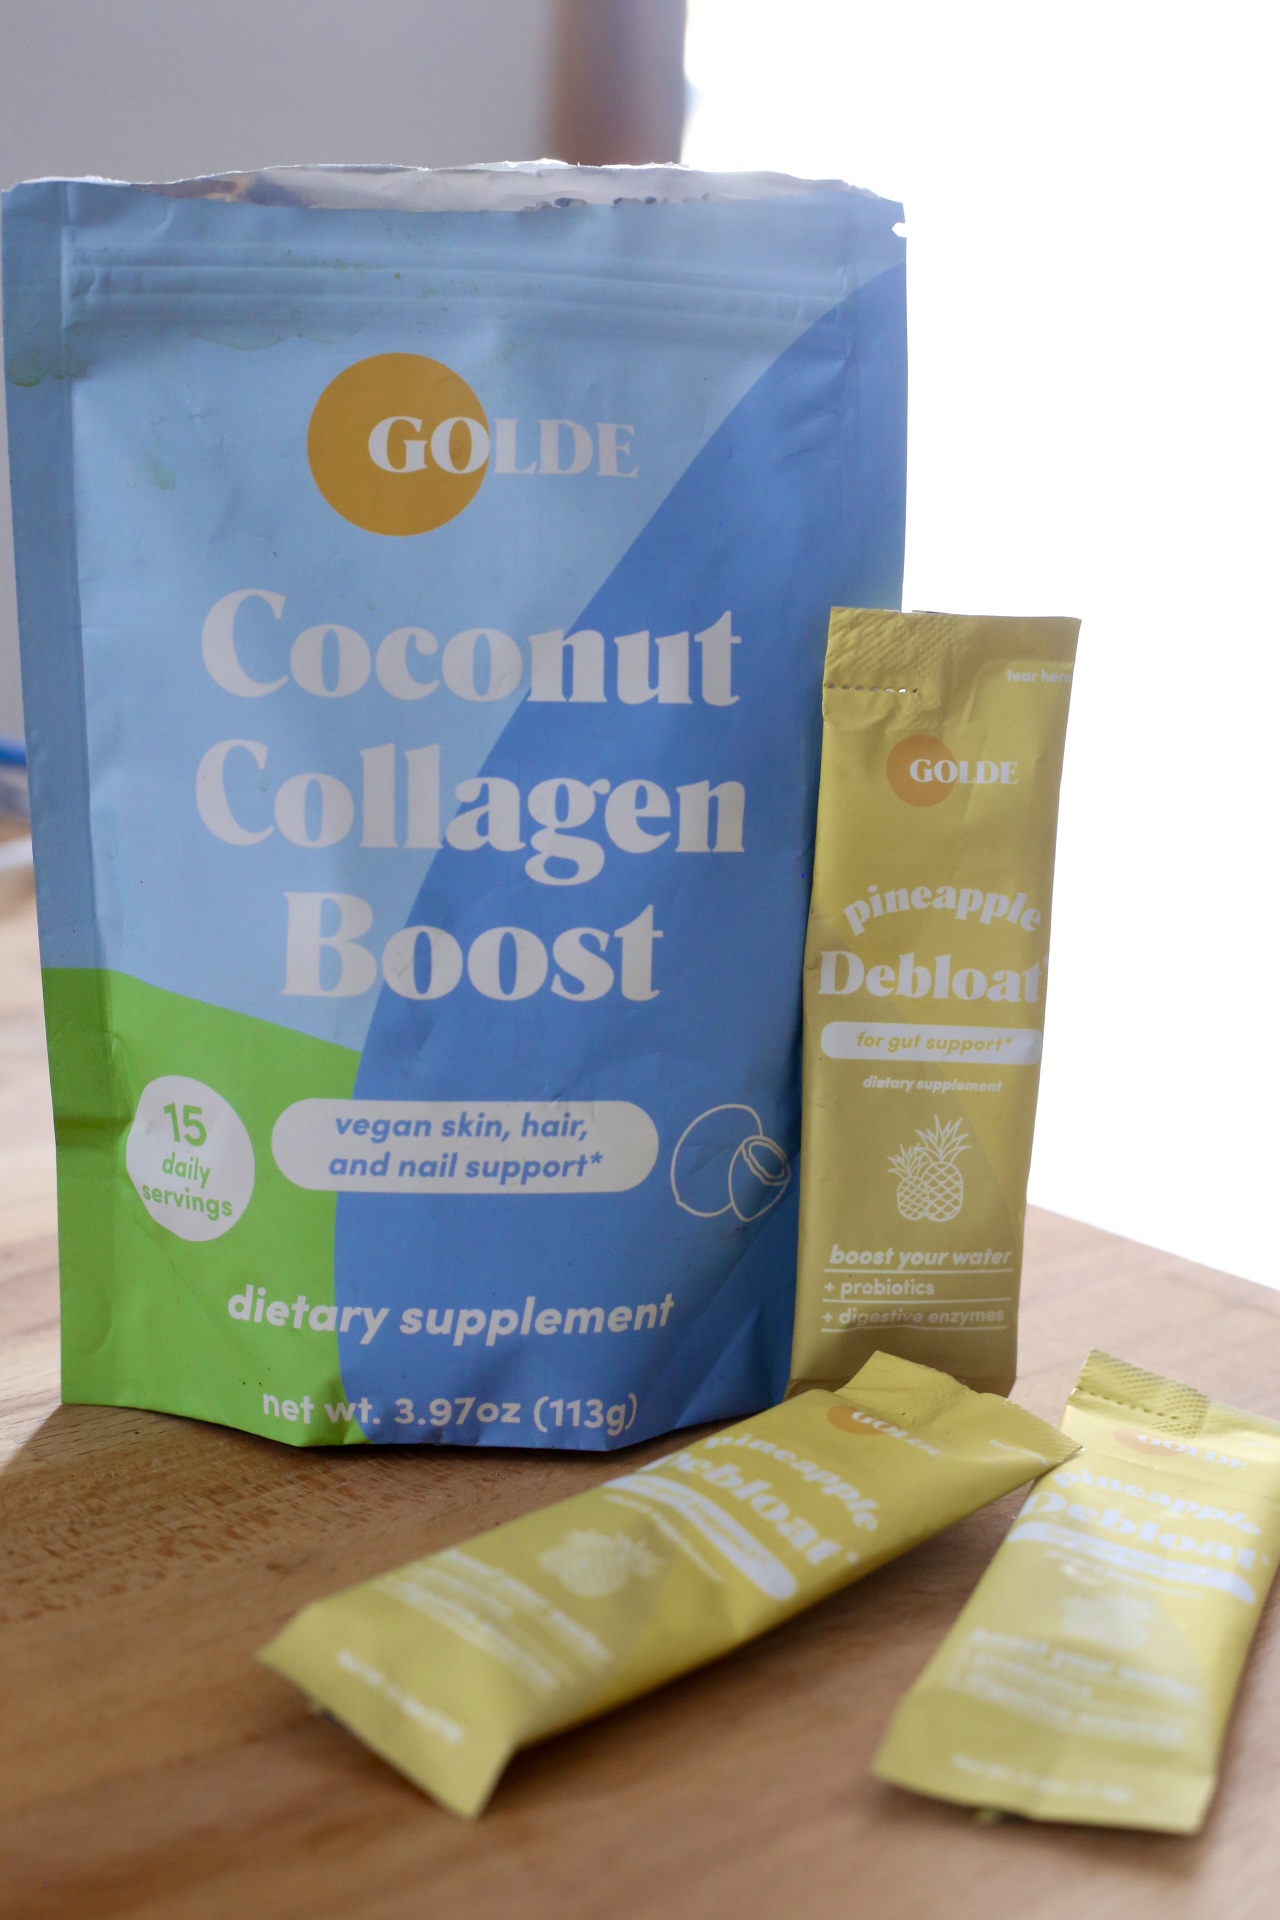 Golde supplements